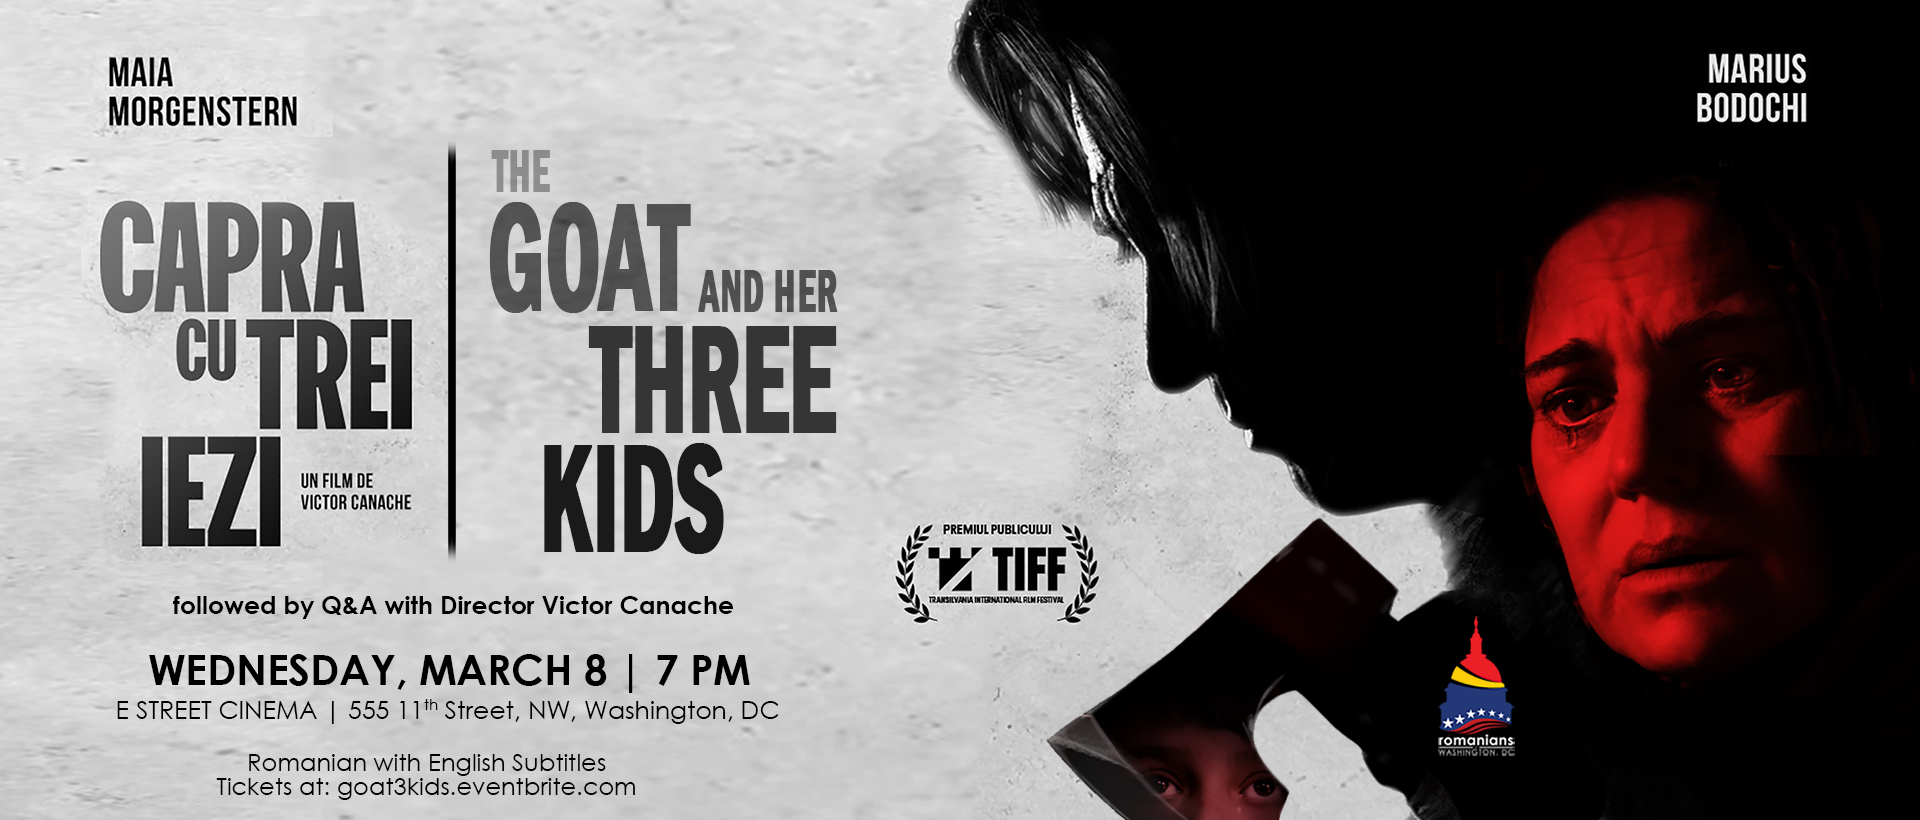 Movie – Capra cu trei iezi | The Goat and Her Three Kids